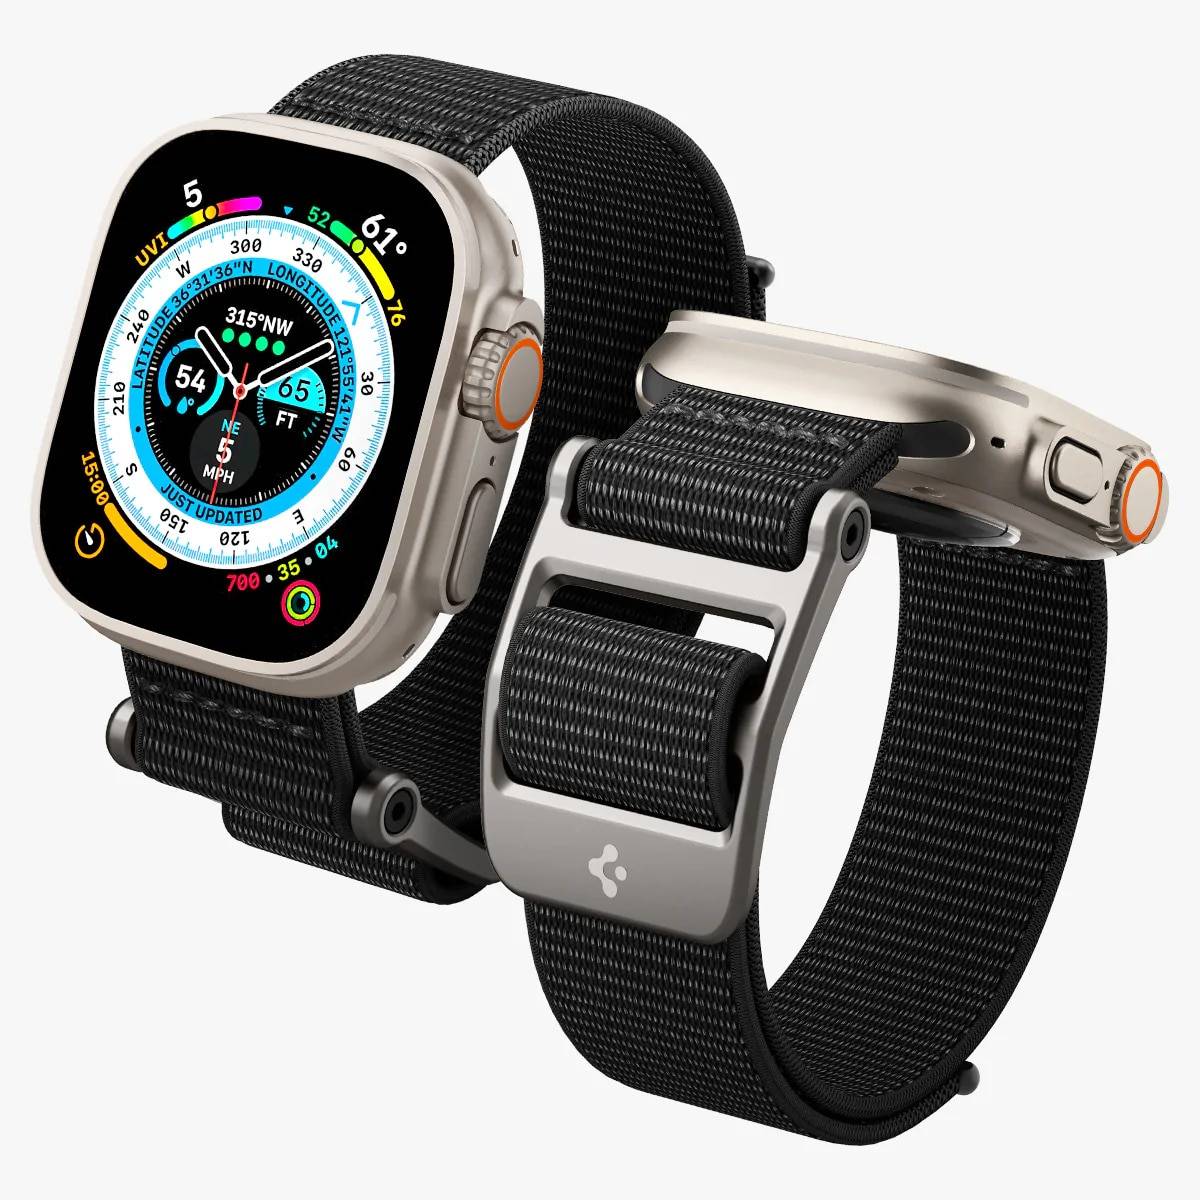 Dây Đồng Hồ Apple Watch Spigen Durapro Flex Series 6Se54-17